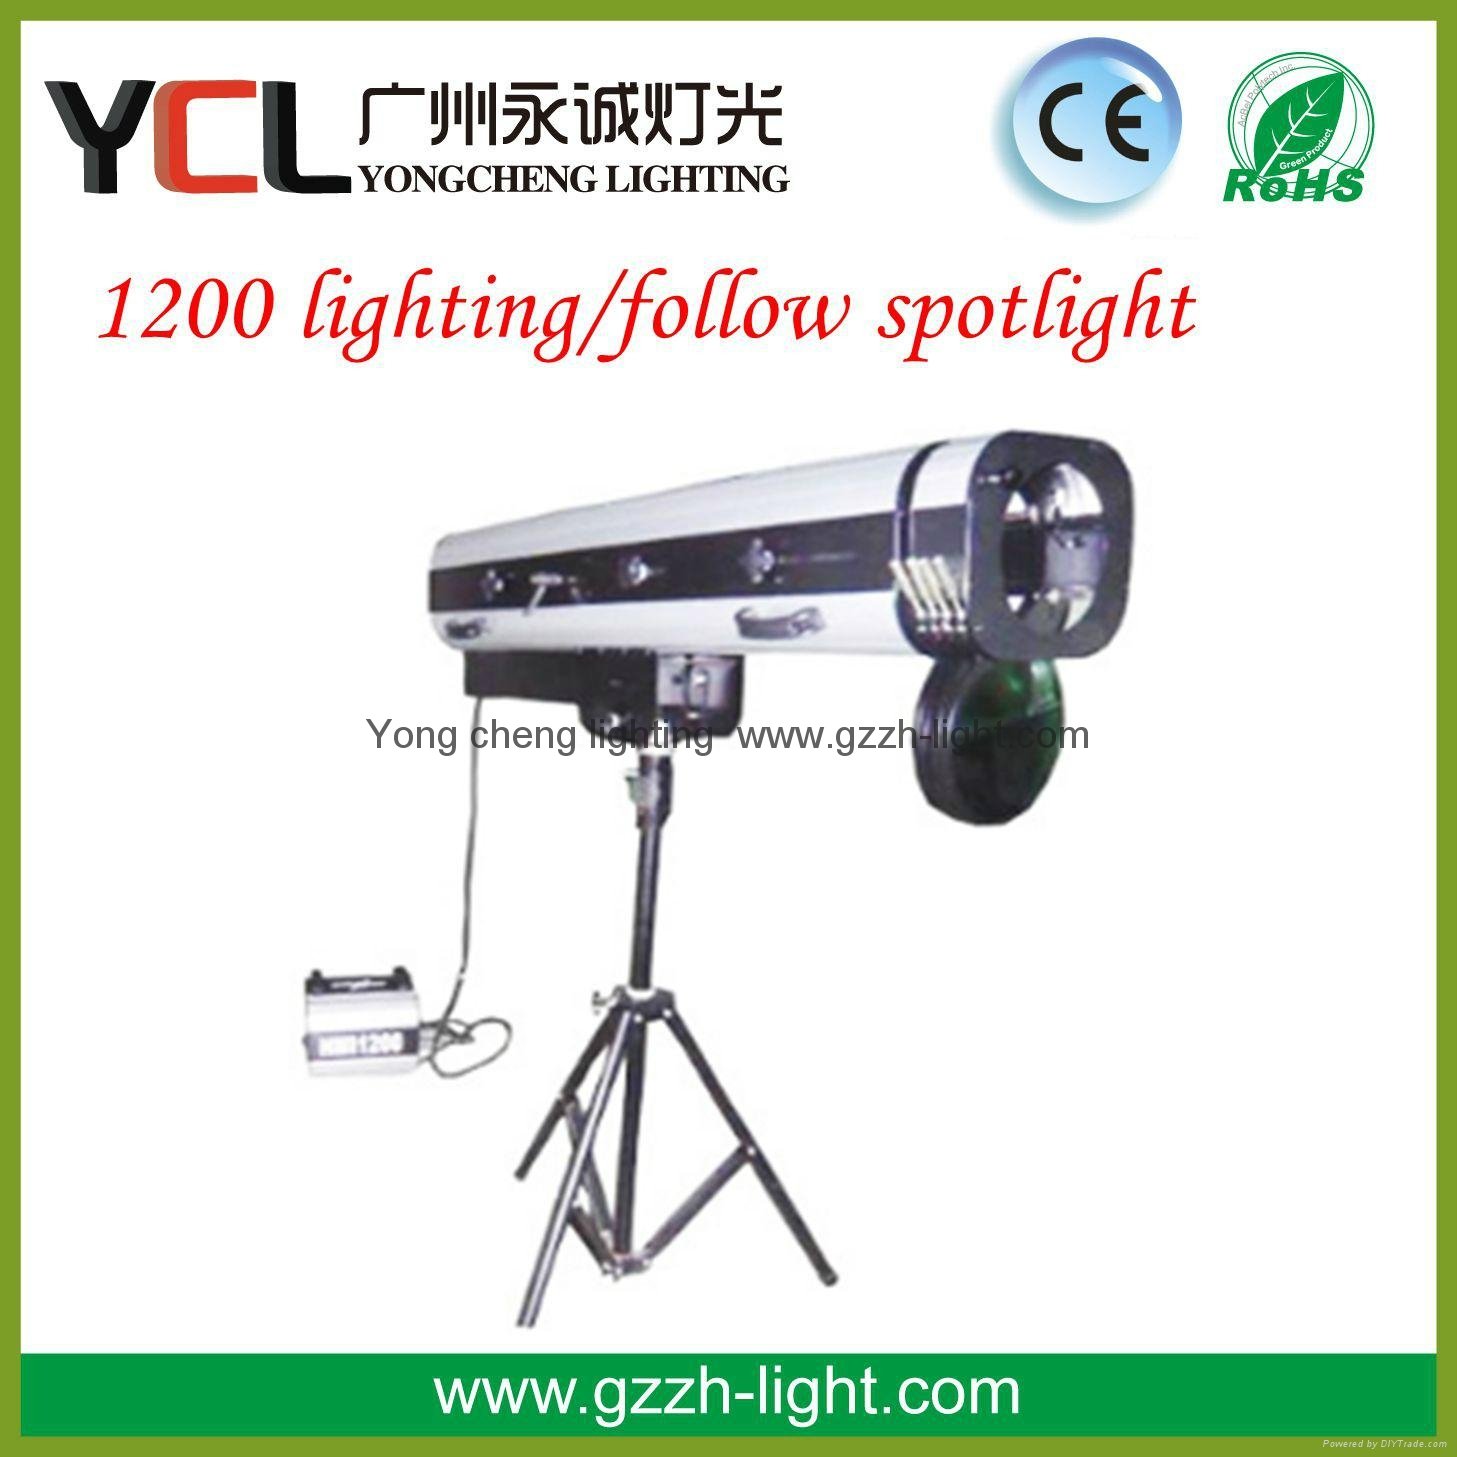 follow spot 1200 lighting/follow spotlight